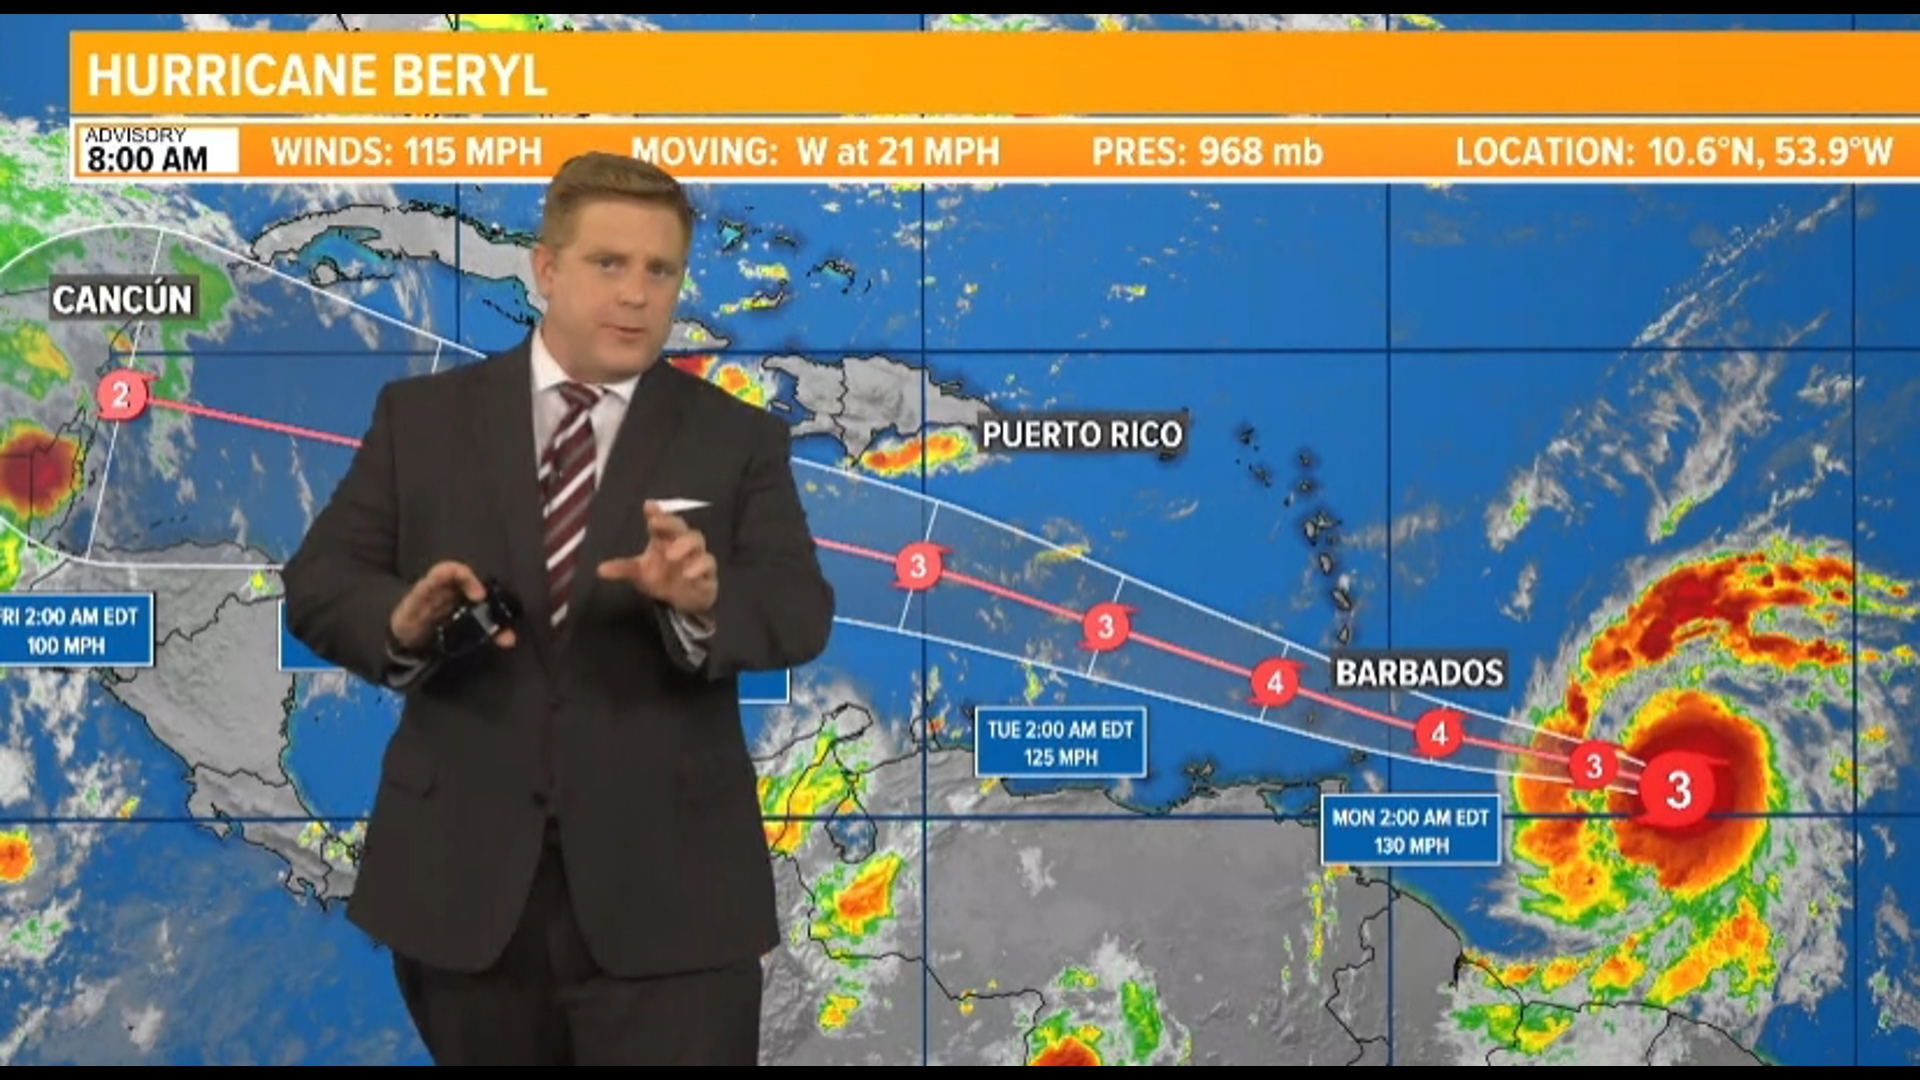 A look at Hurricane Beryl as it strengthens in the Atlantic